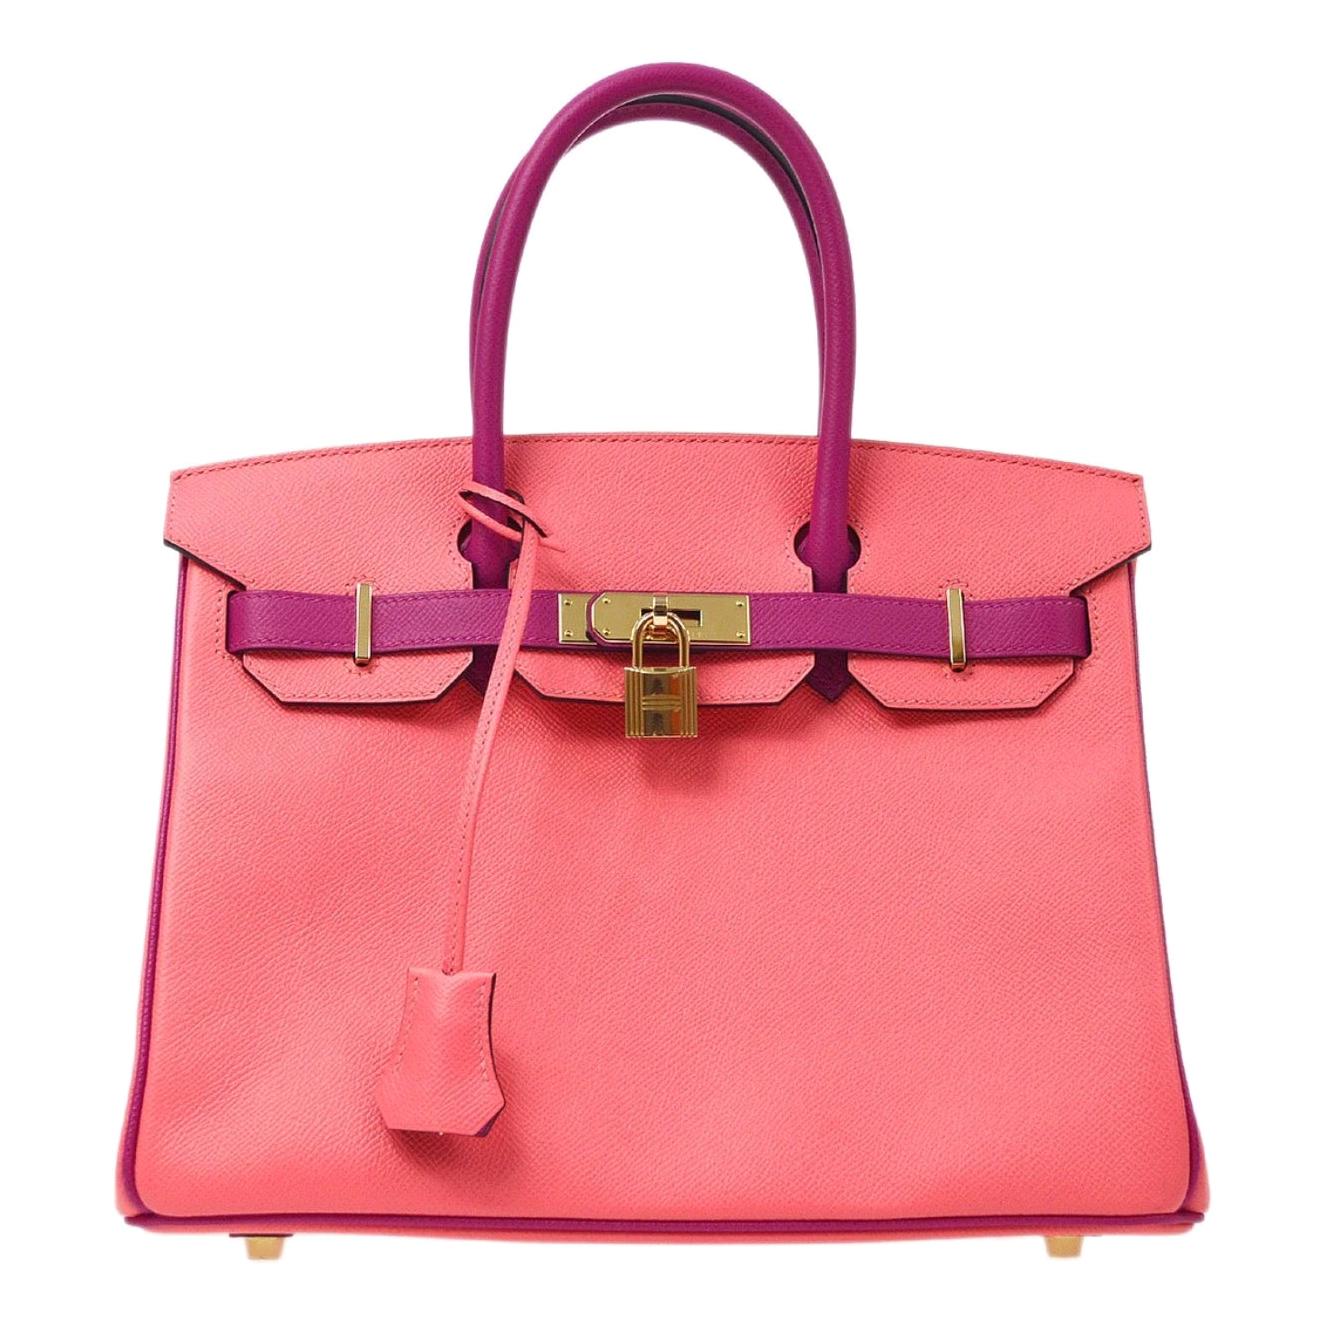 Hermes Special Order Birkin 30 Pink Purple Leather Top Handle Tote Bag in Box 